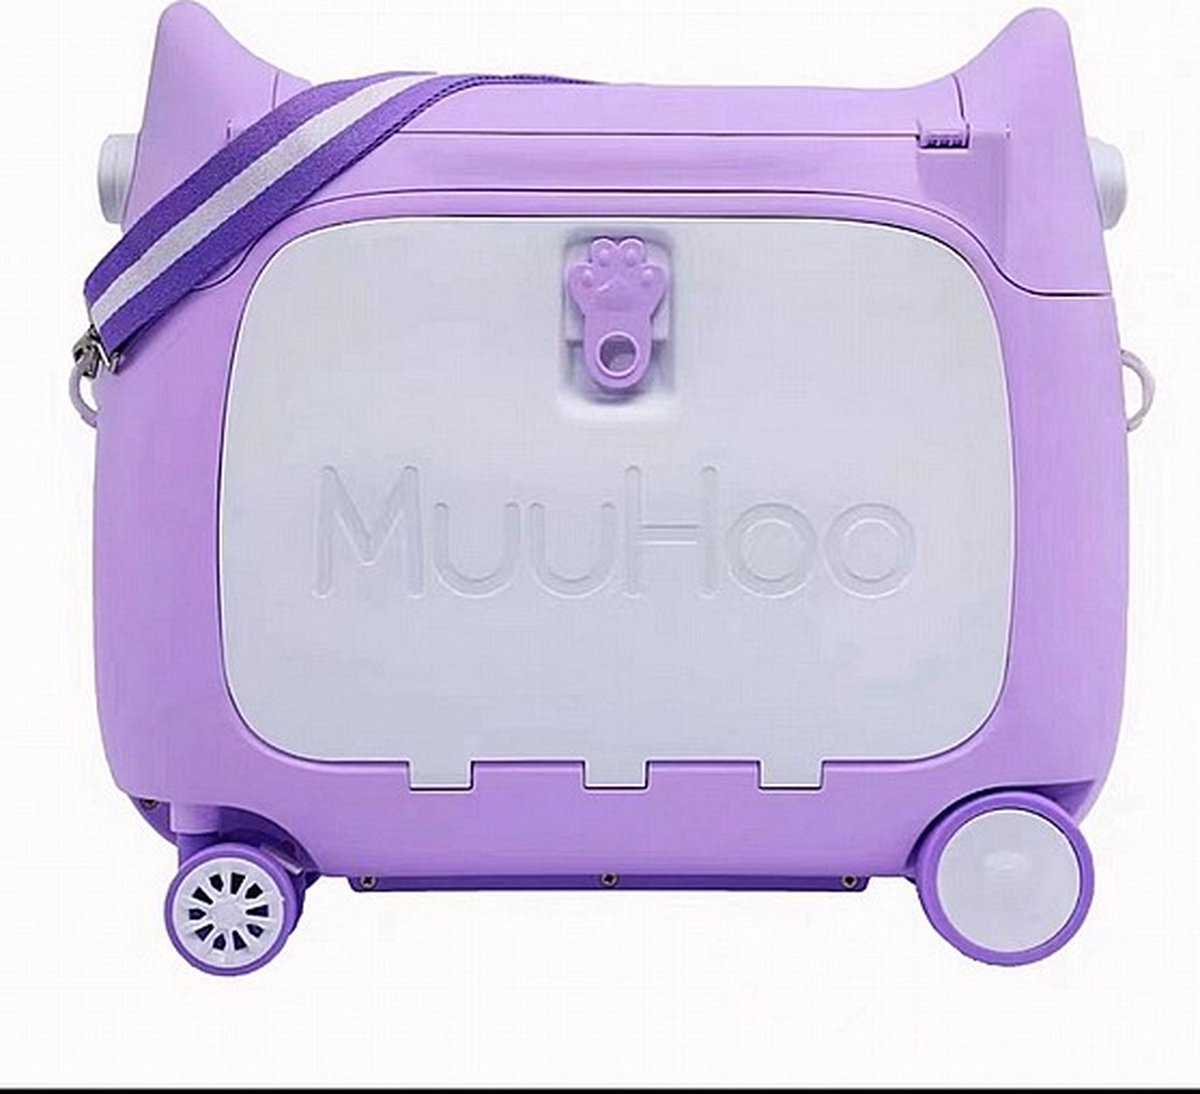 Muuhoo - Kinderkoffer - Handbagage - Bed - Zitbaar - Purple Penguin